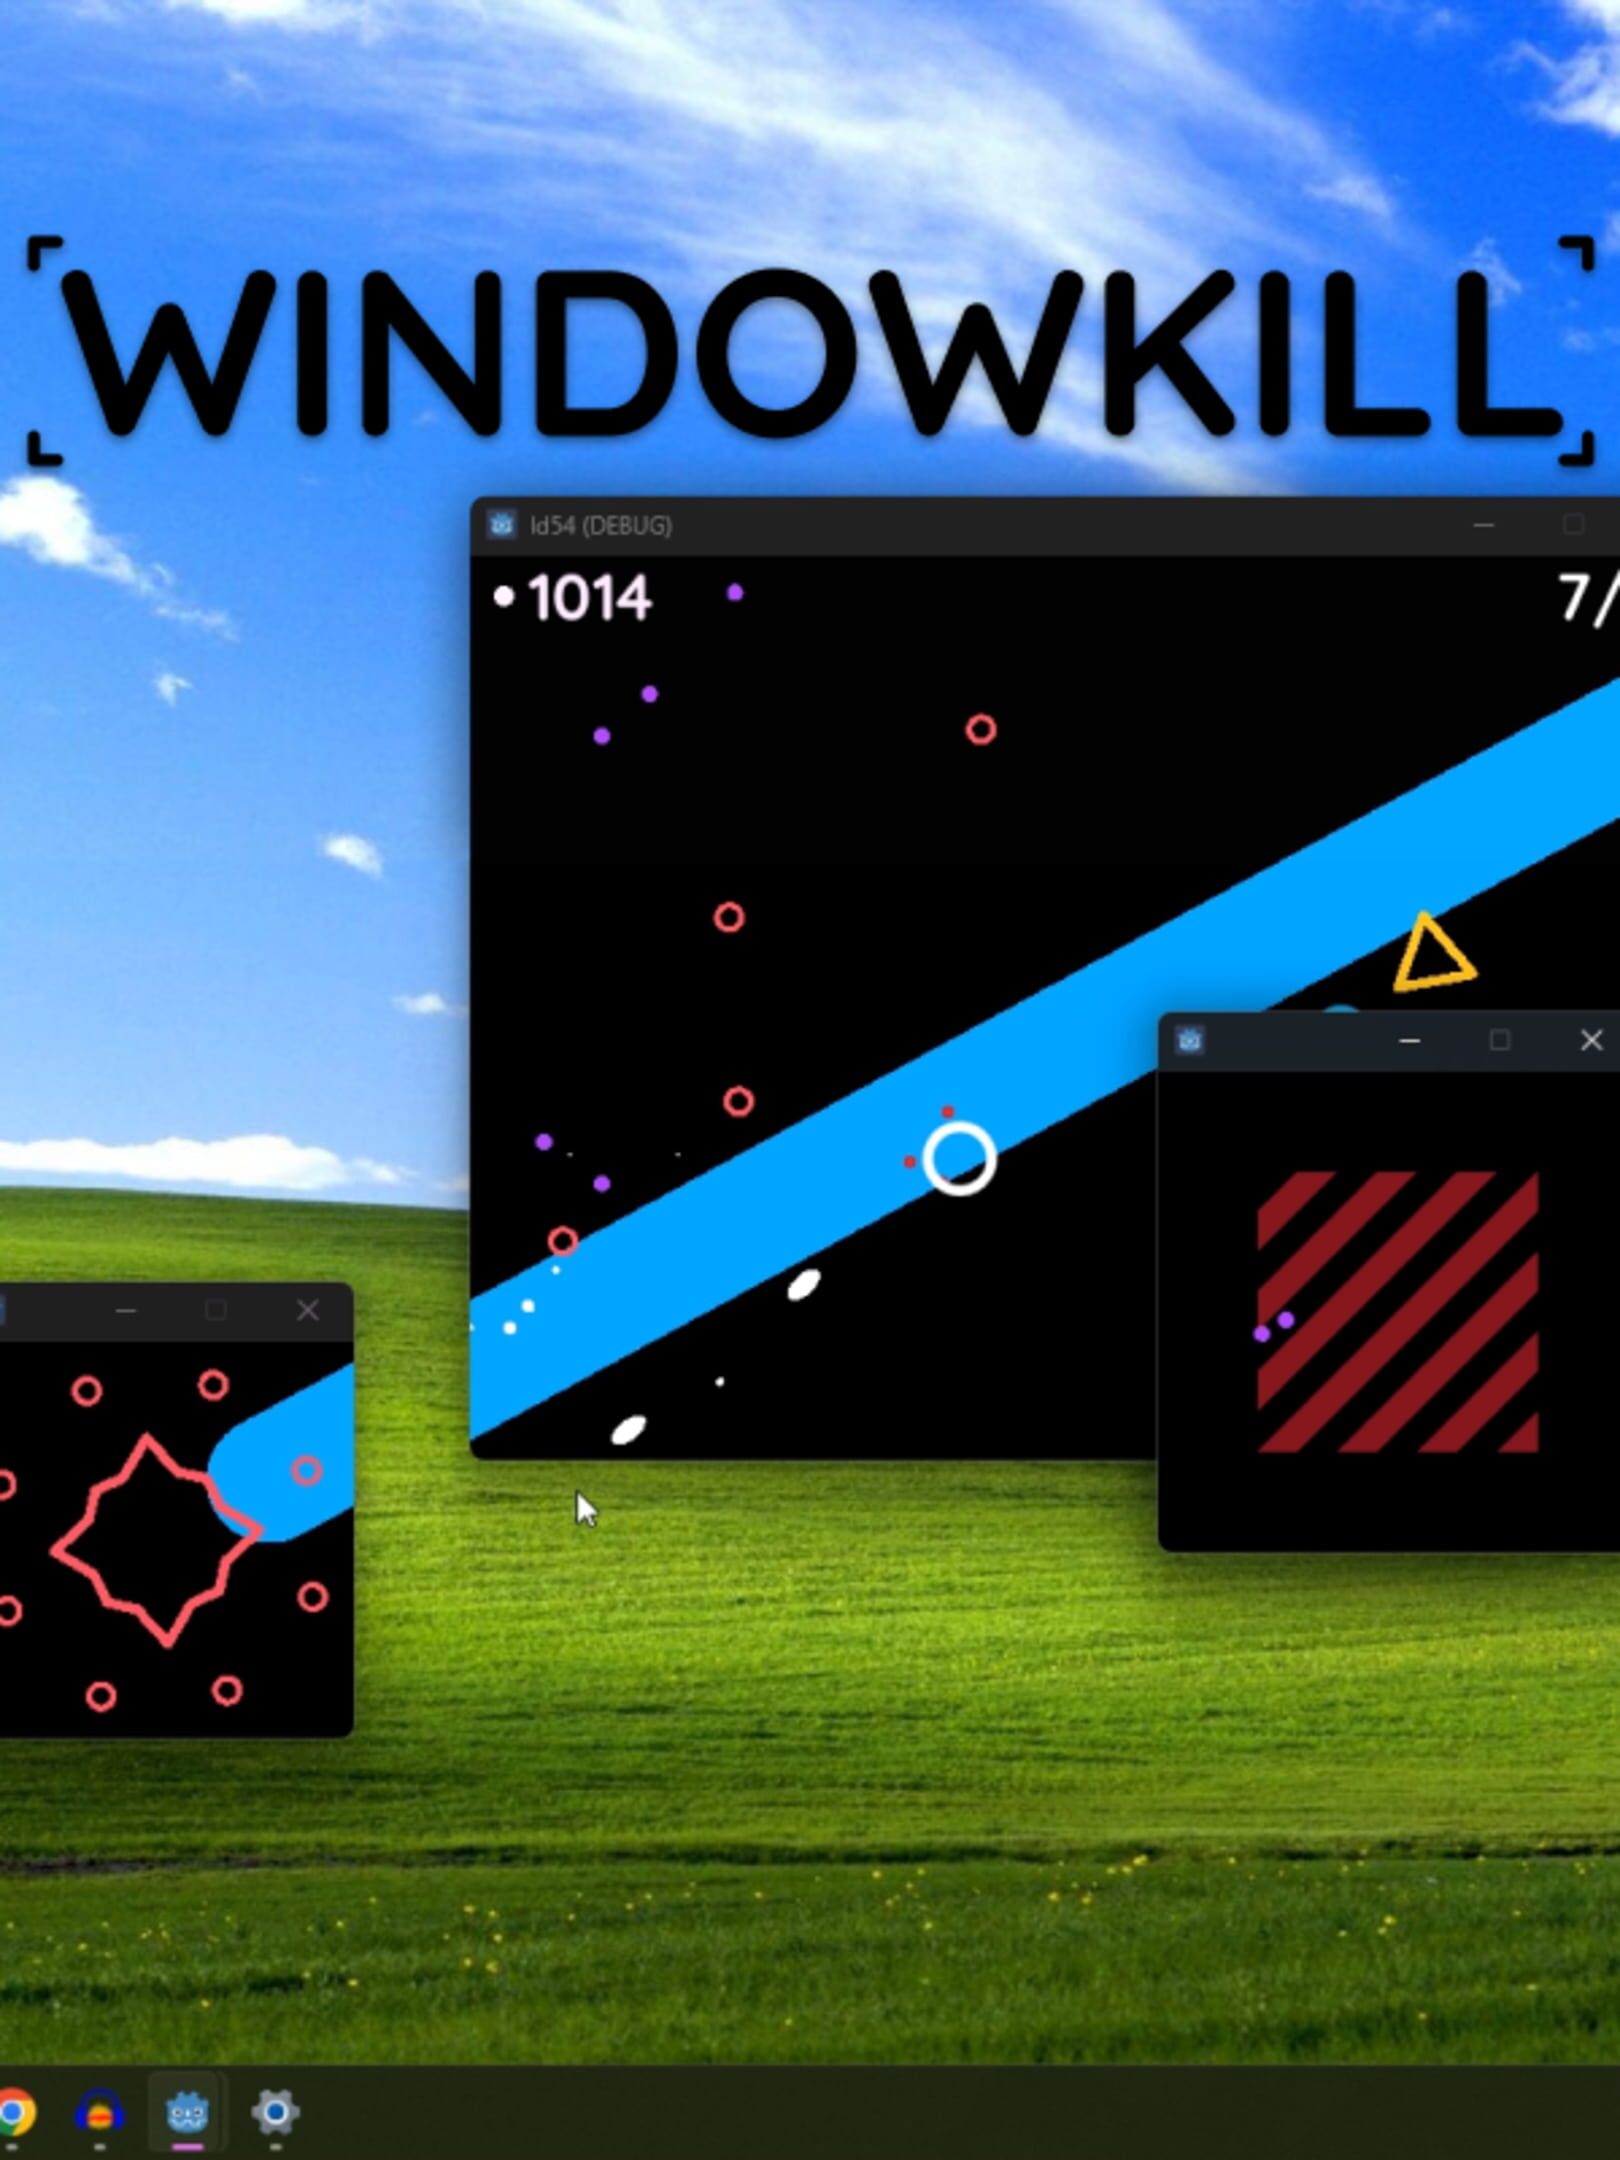 Windowkill | Stash - Games tracker